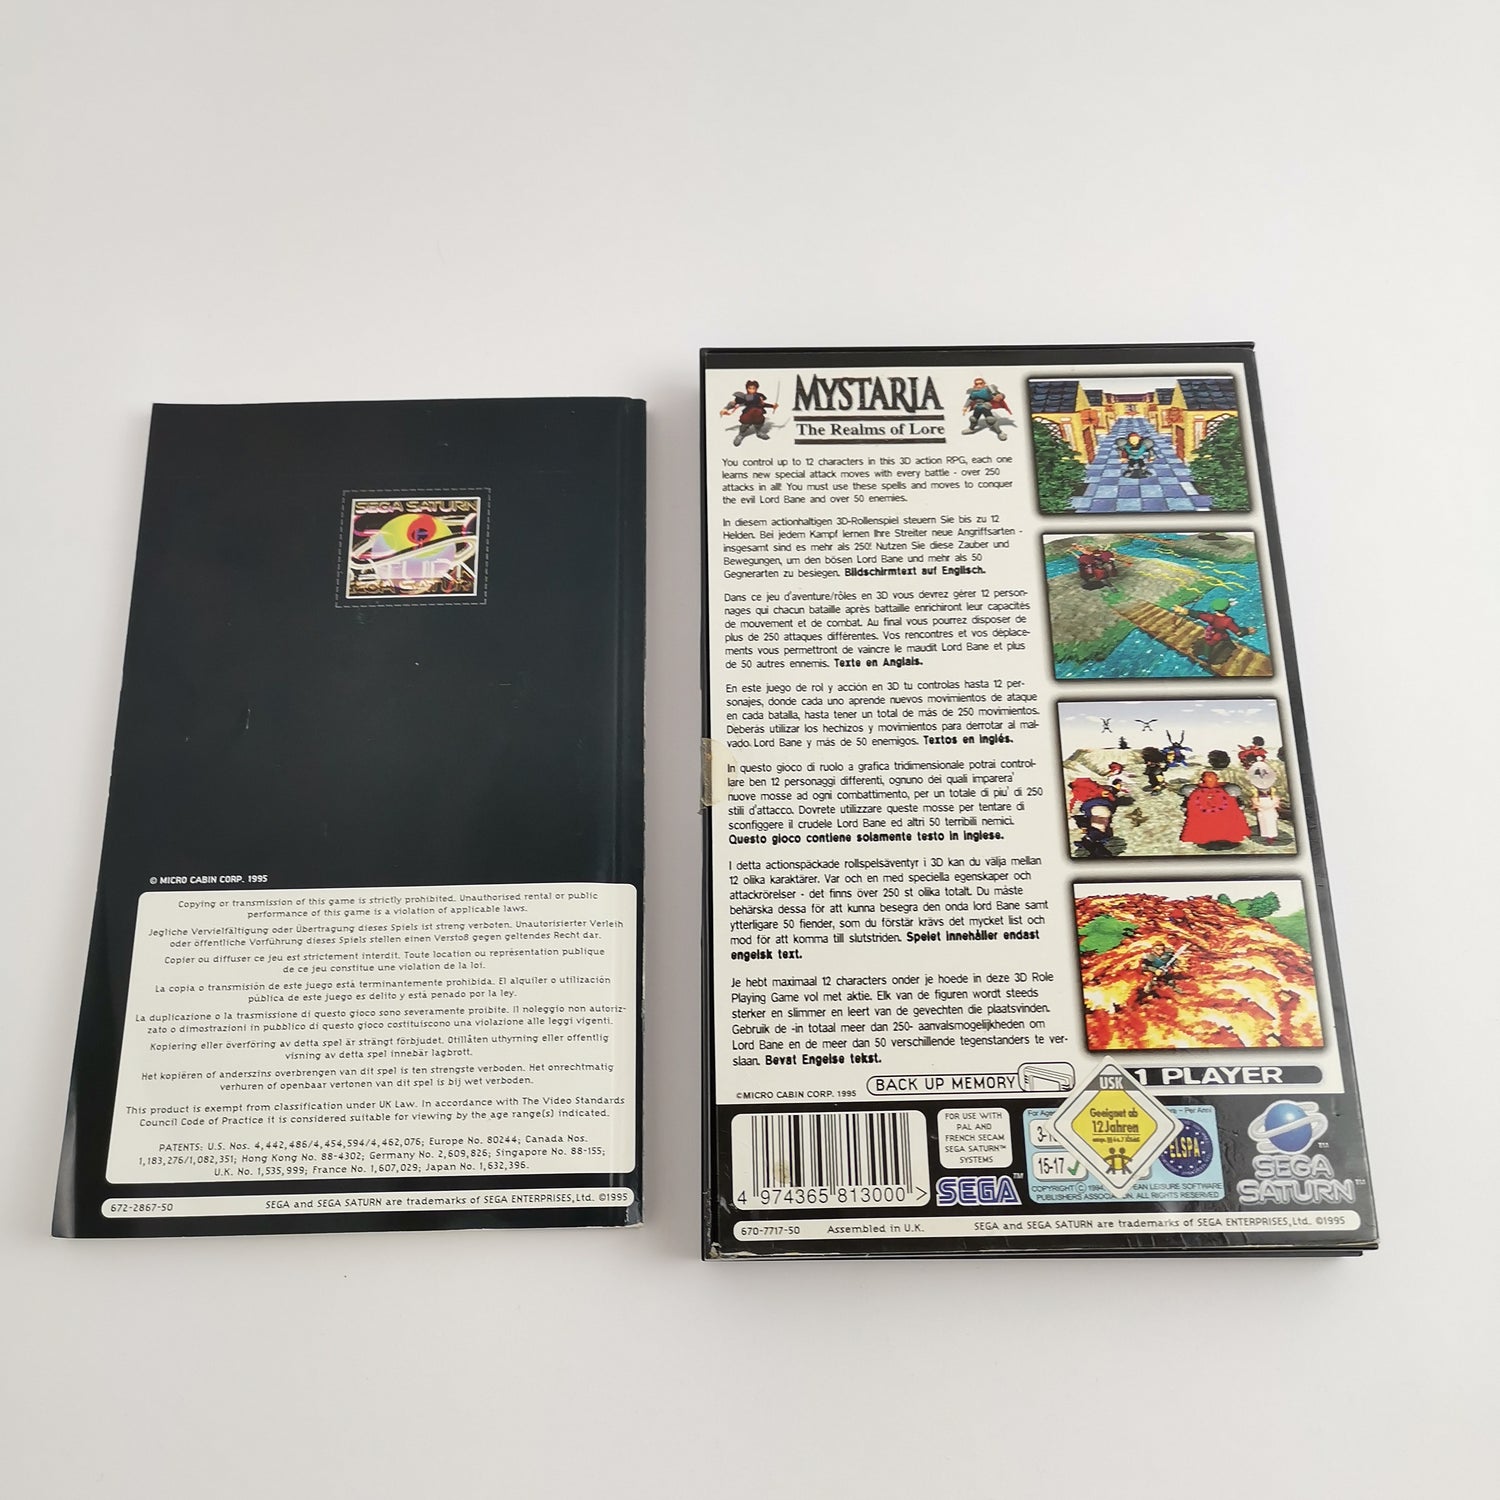 Sega Saturn Spiel : Mystaria The Realms of Lore - OVP & Anleitung | PAL Version